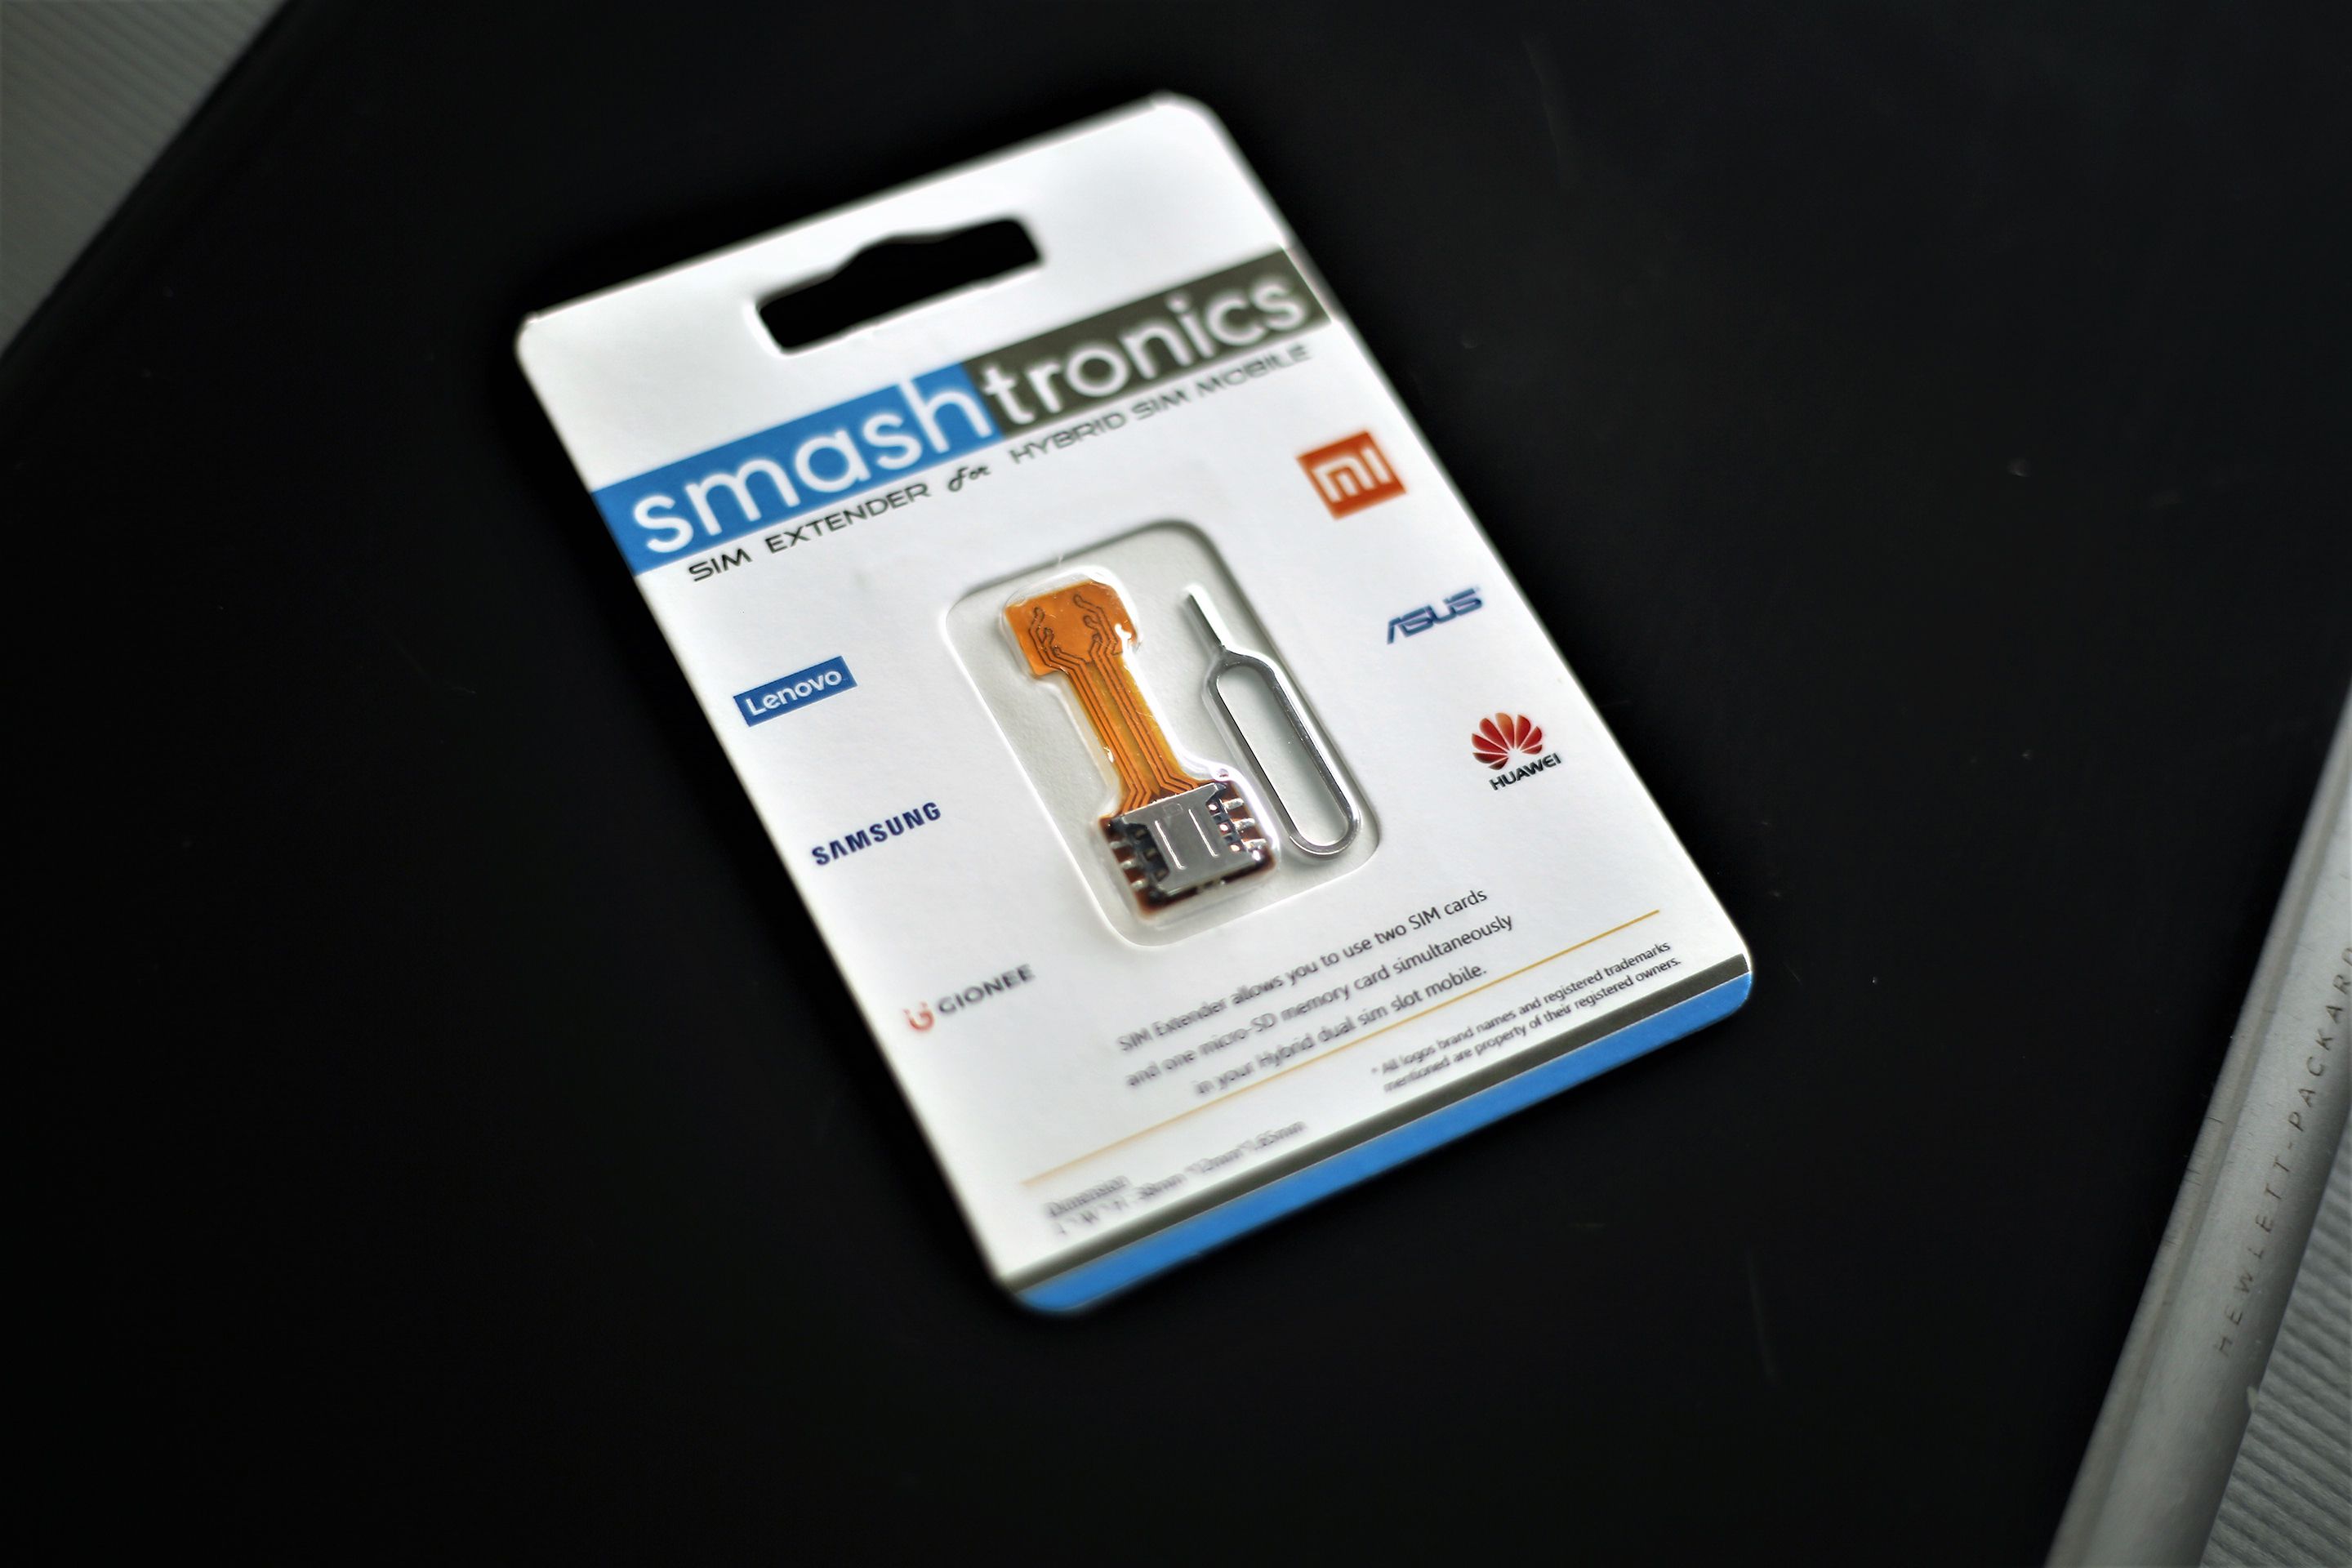 Smashtronics - Hybrid dual sim slot adaptor - Avails You To Run dual